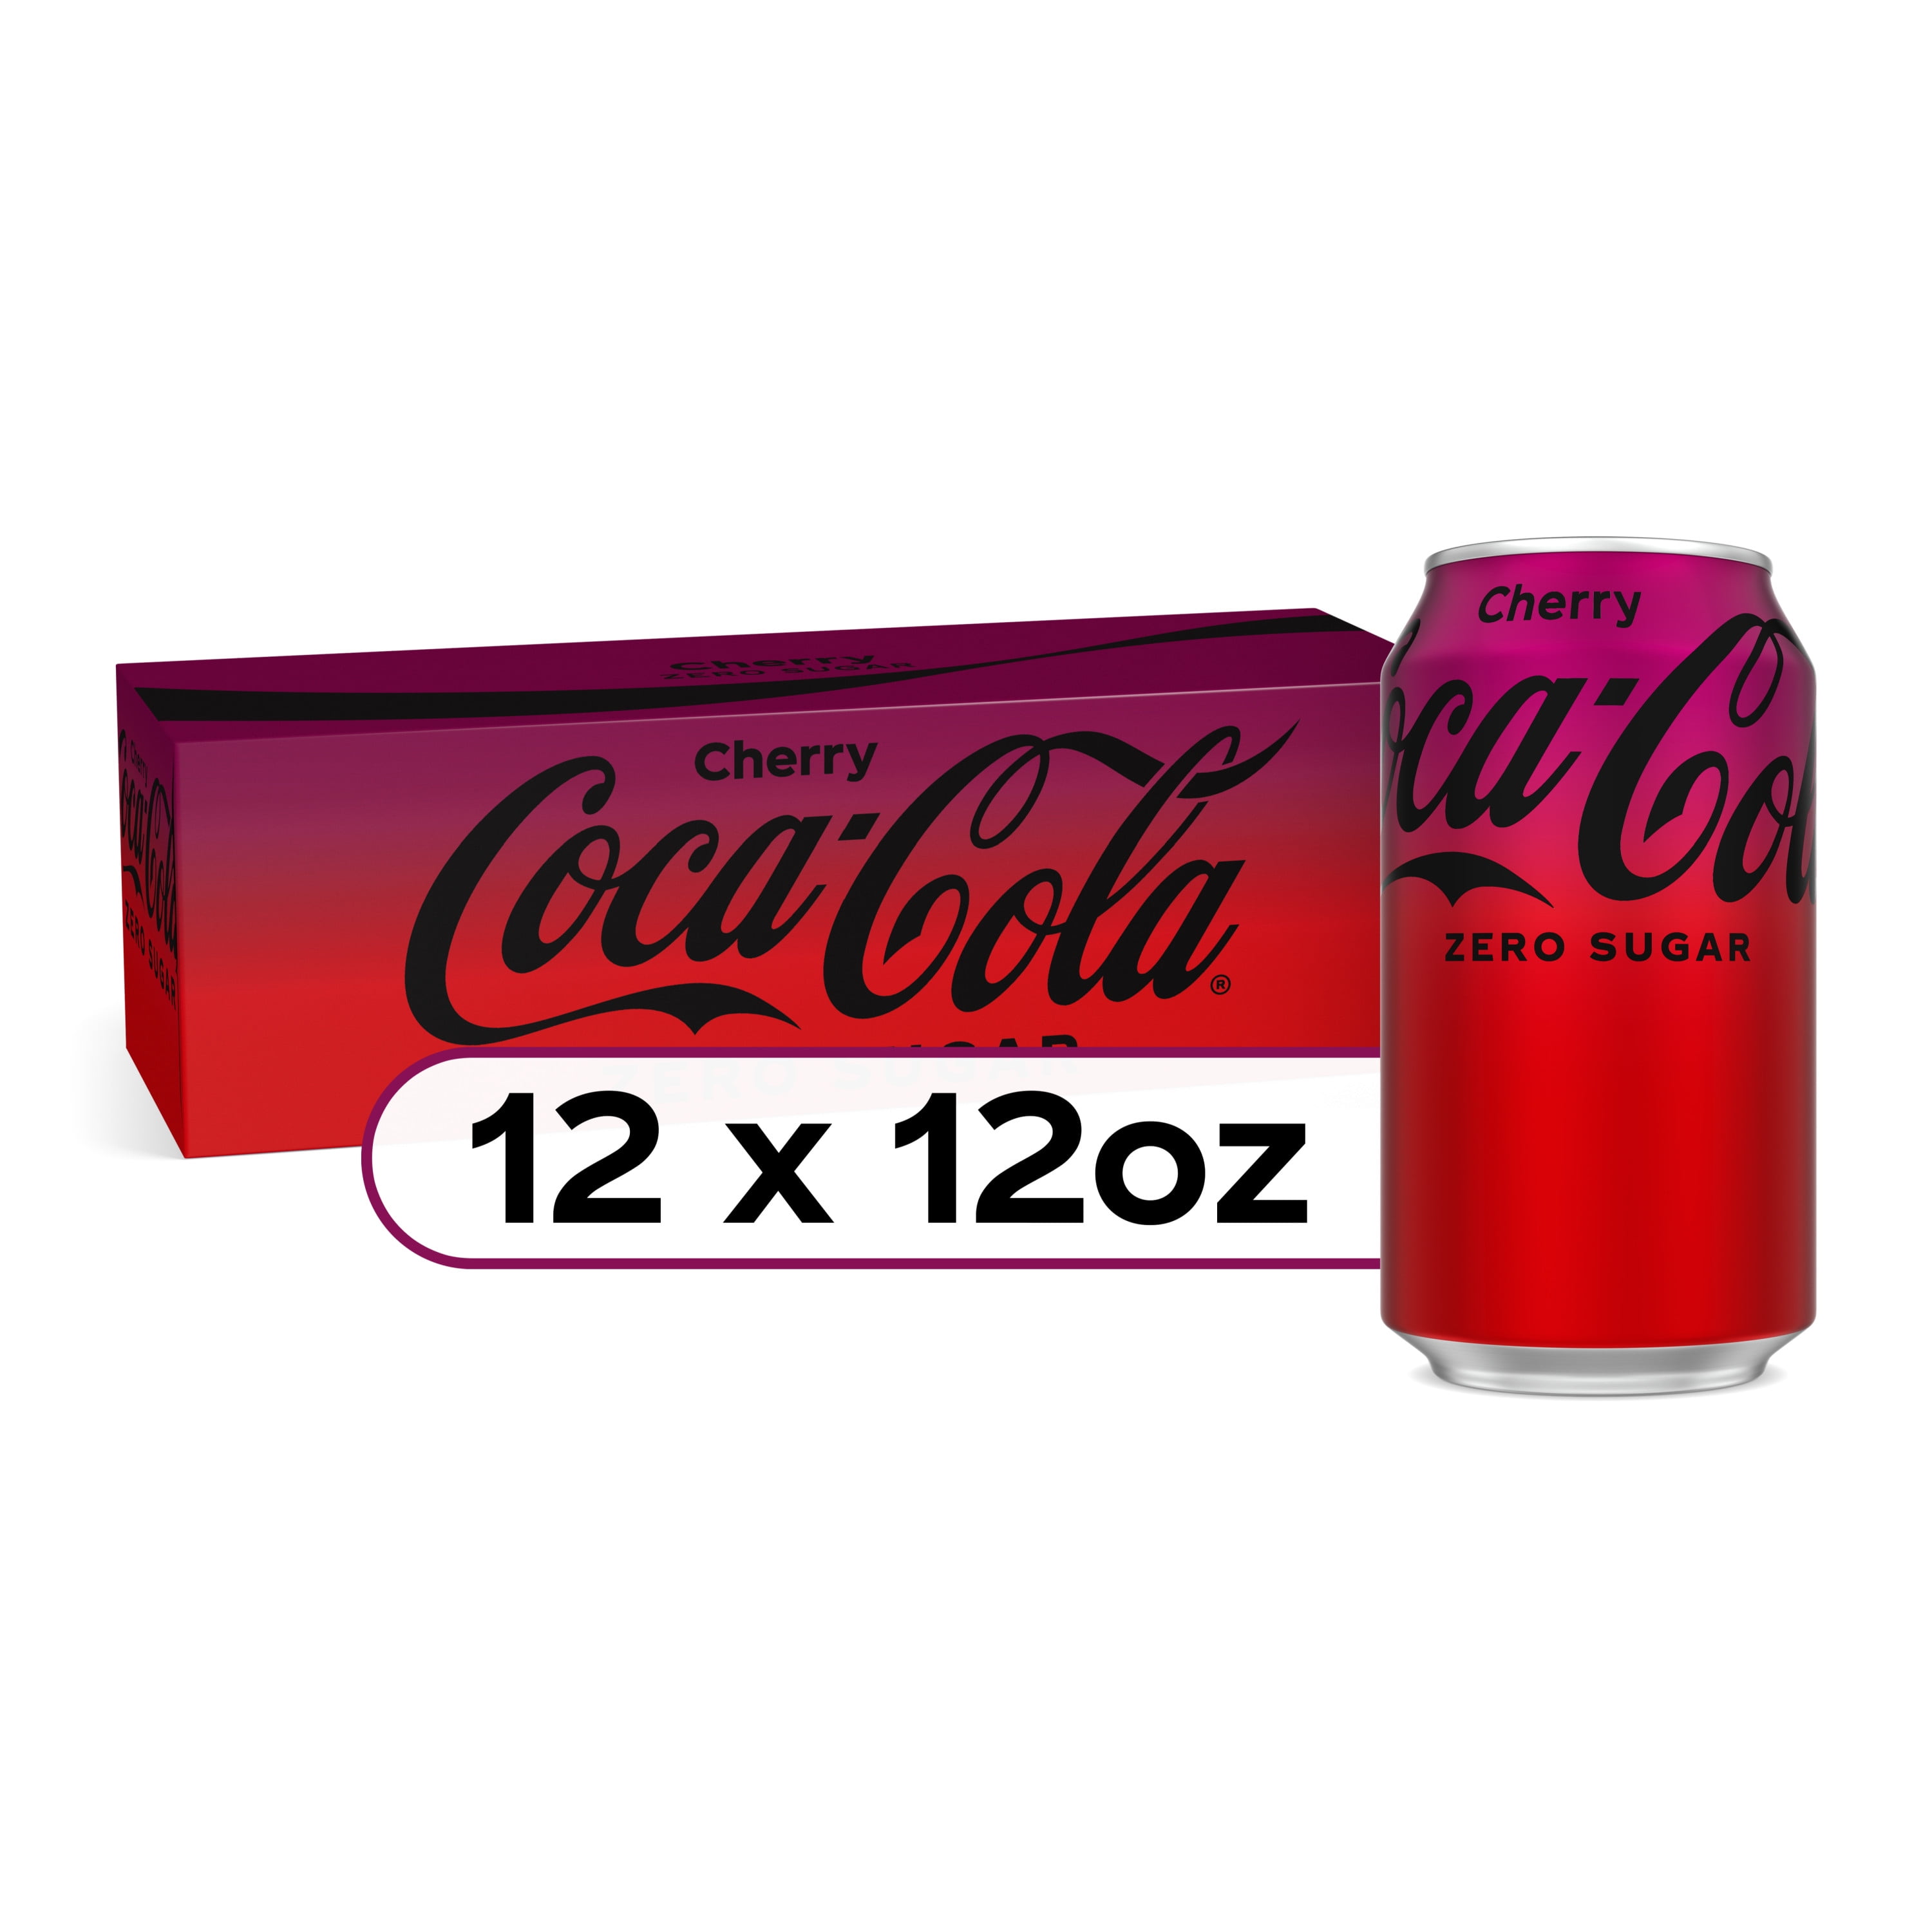 Coca Cola Zero 6-pack, Worldwide delivery